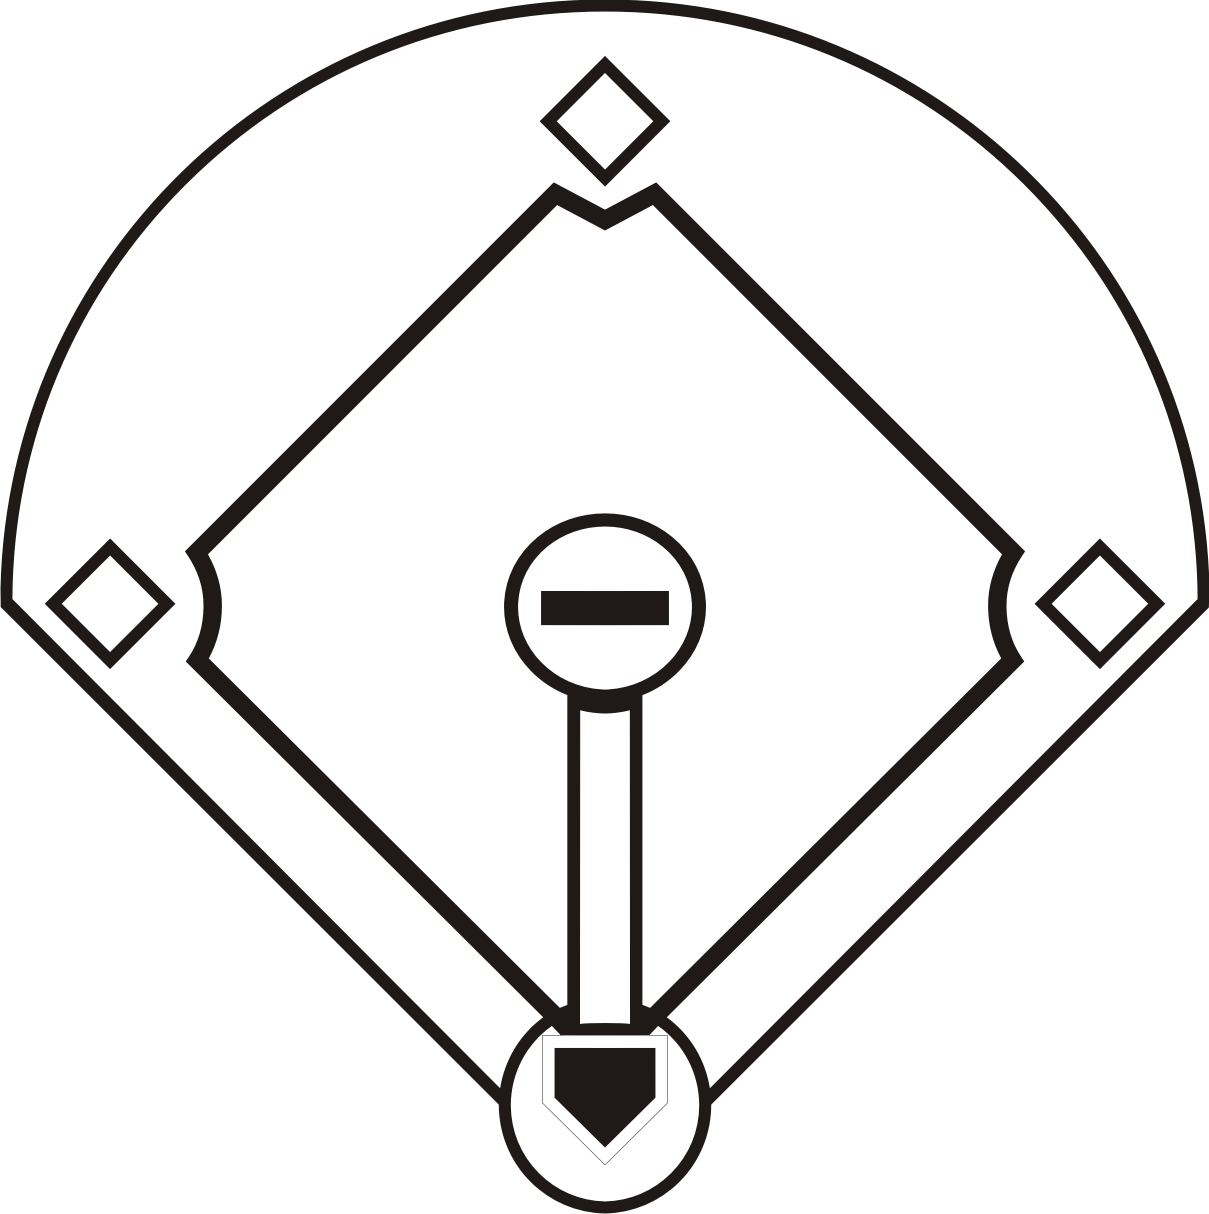 Softball Field Diagram